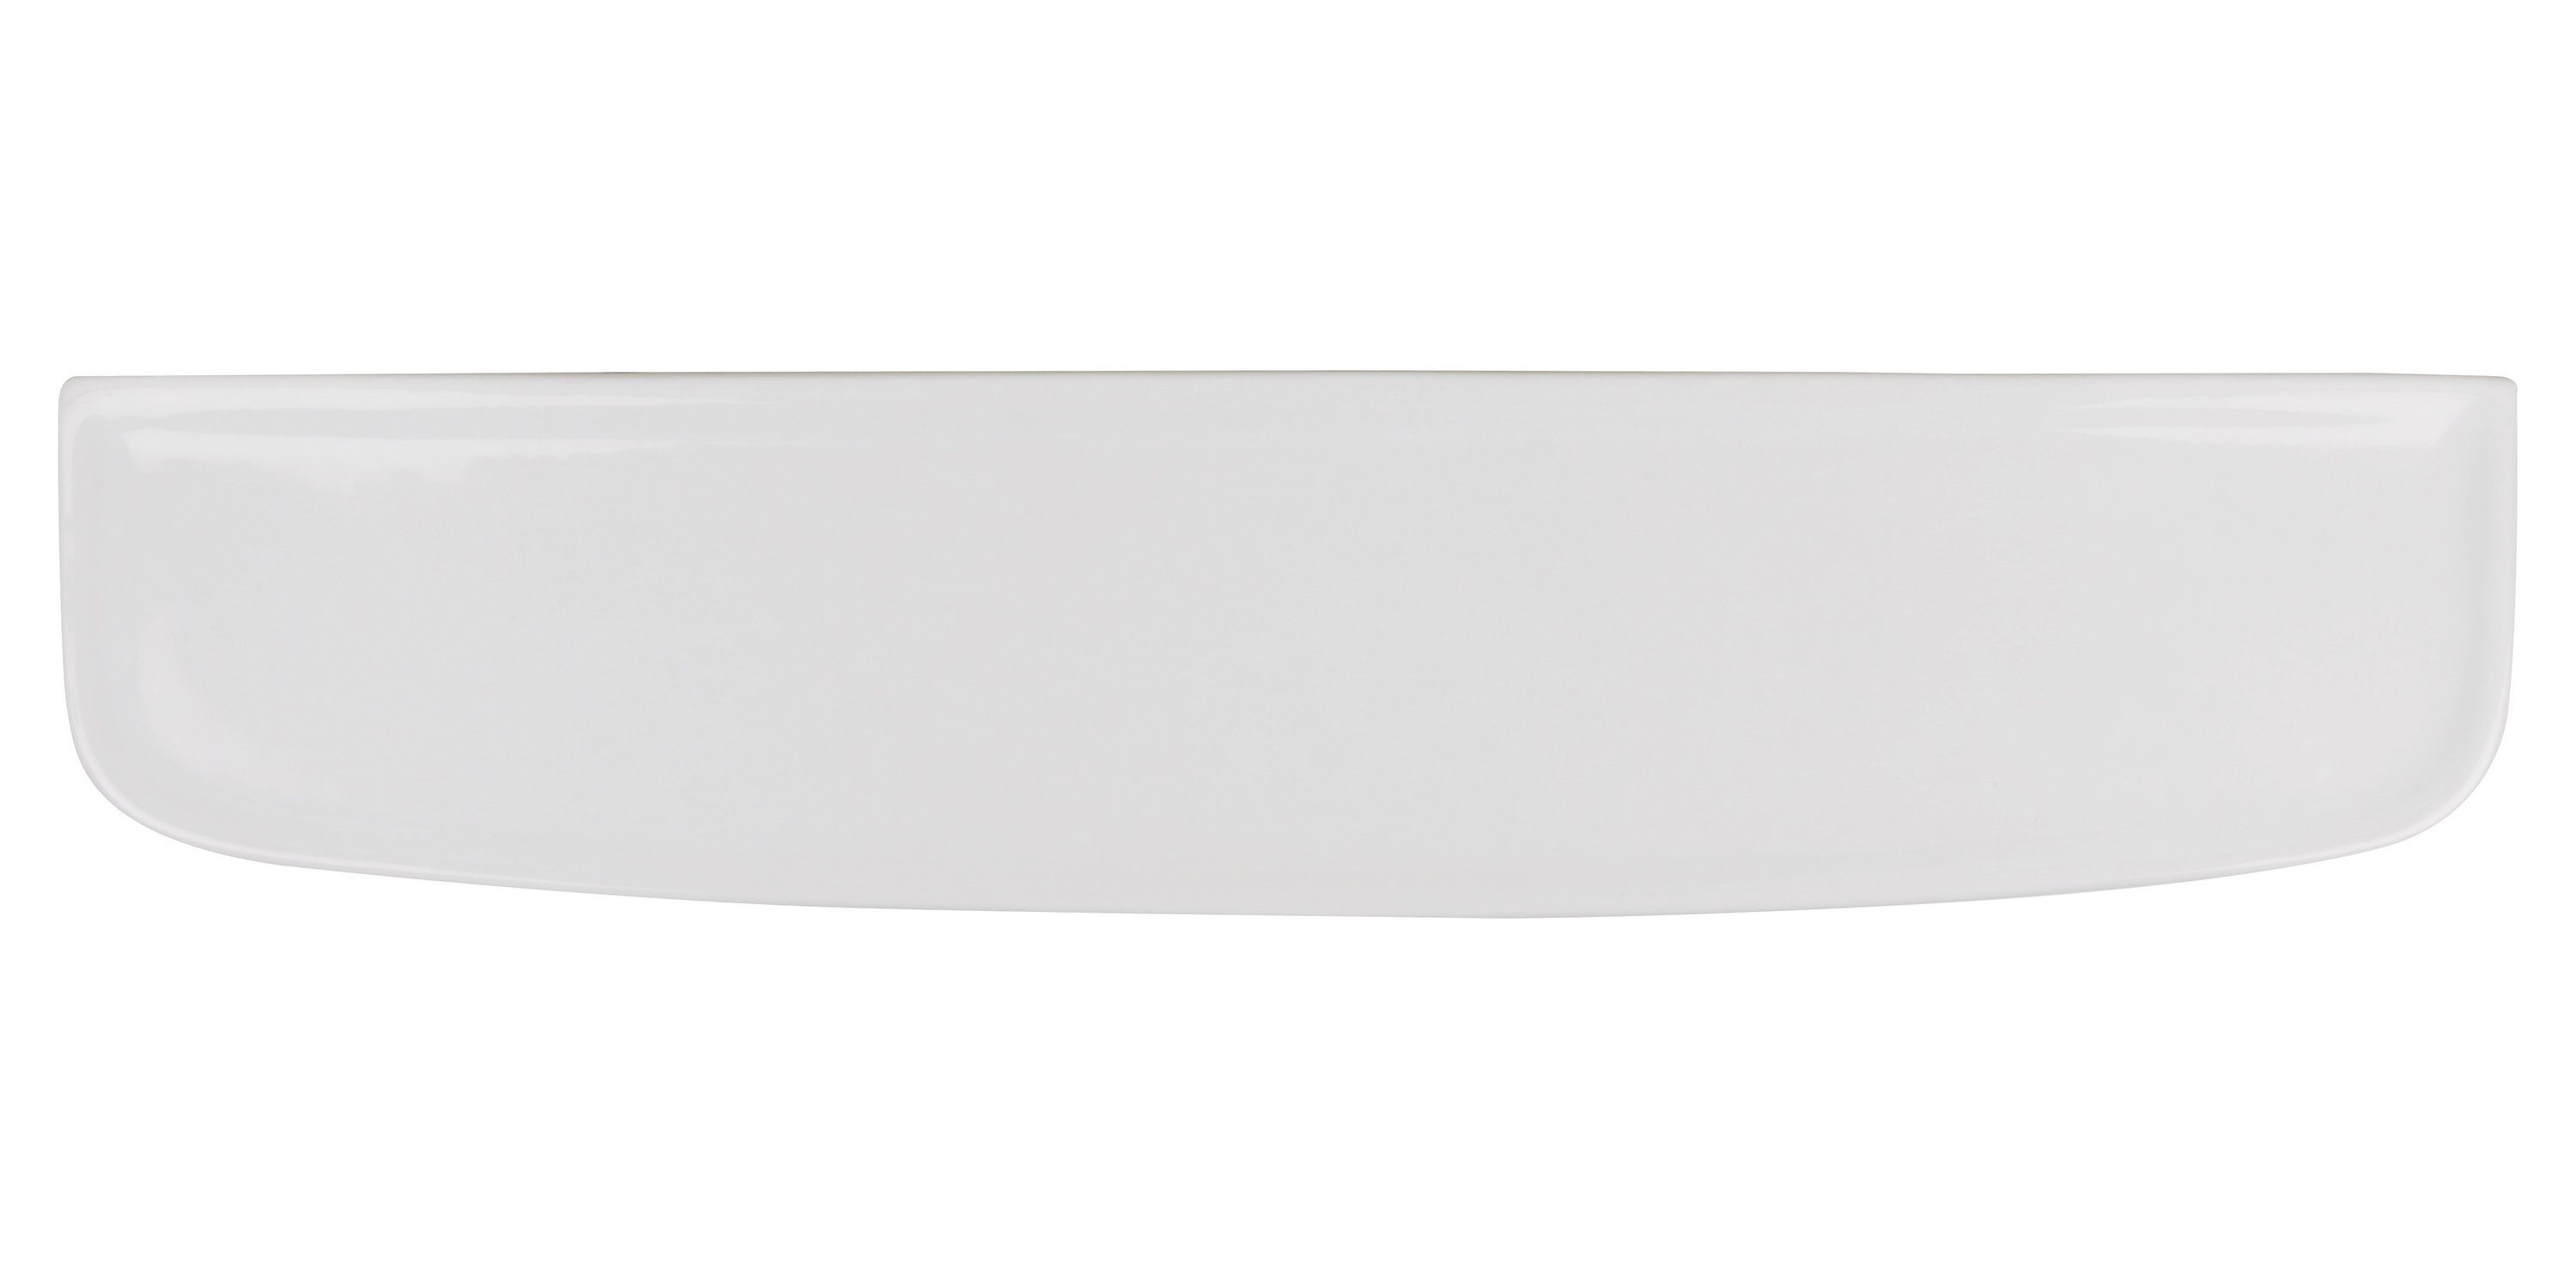 Spiegelablage Überlaufschutz, 021401 Bohrmontage, Weiß, Badregal, 60 Sanitär-Keramik, cm, 1-tlg., aquaSu